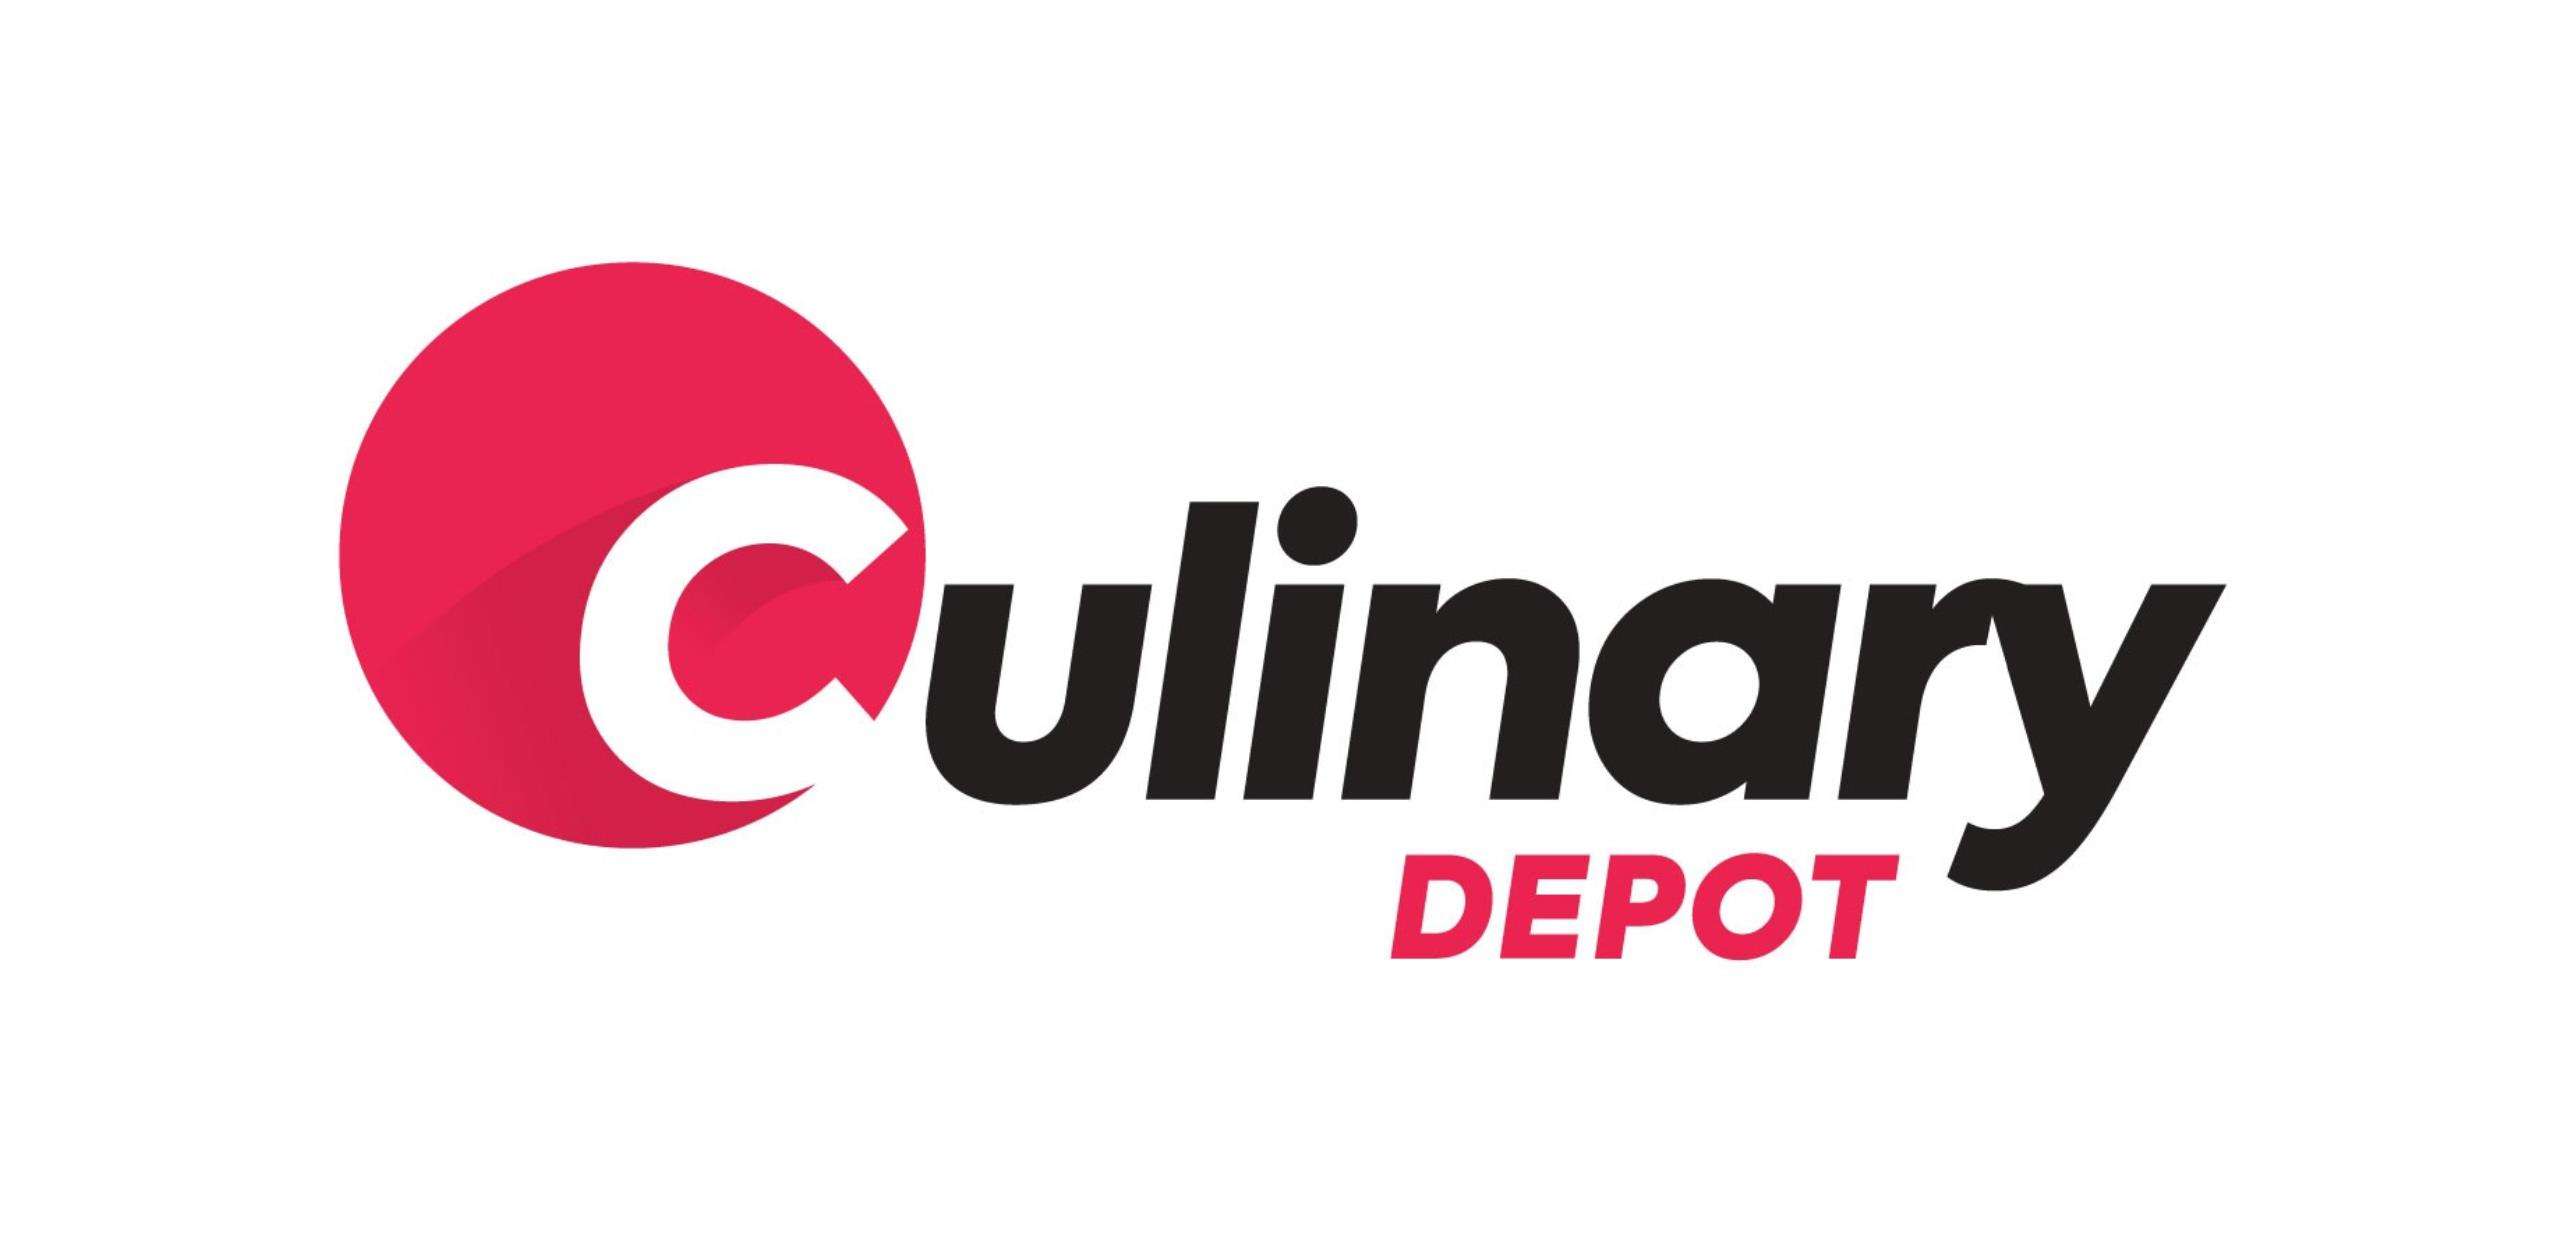 Culinary Depot Inc. Logo